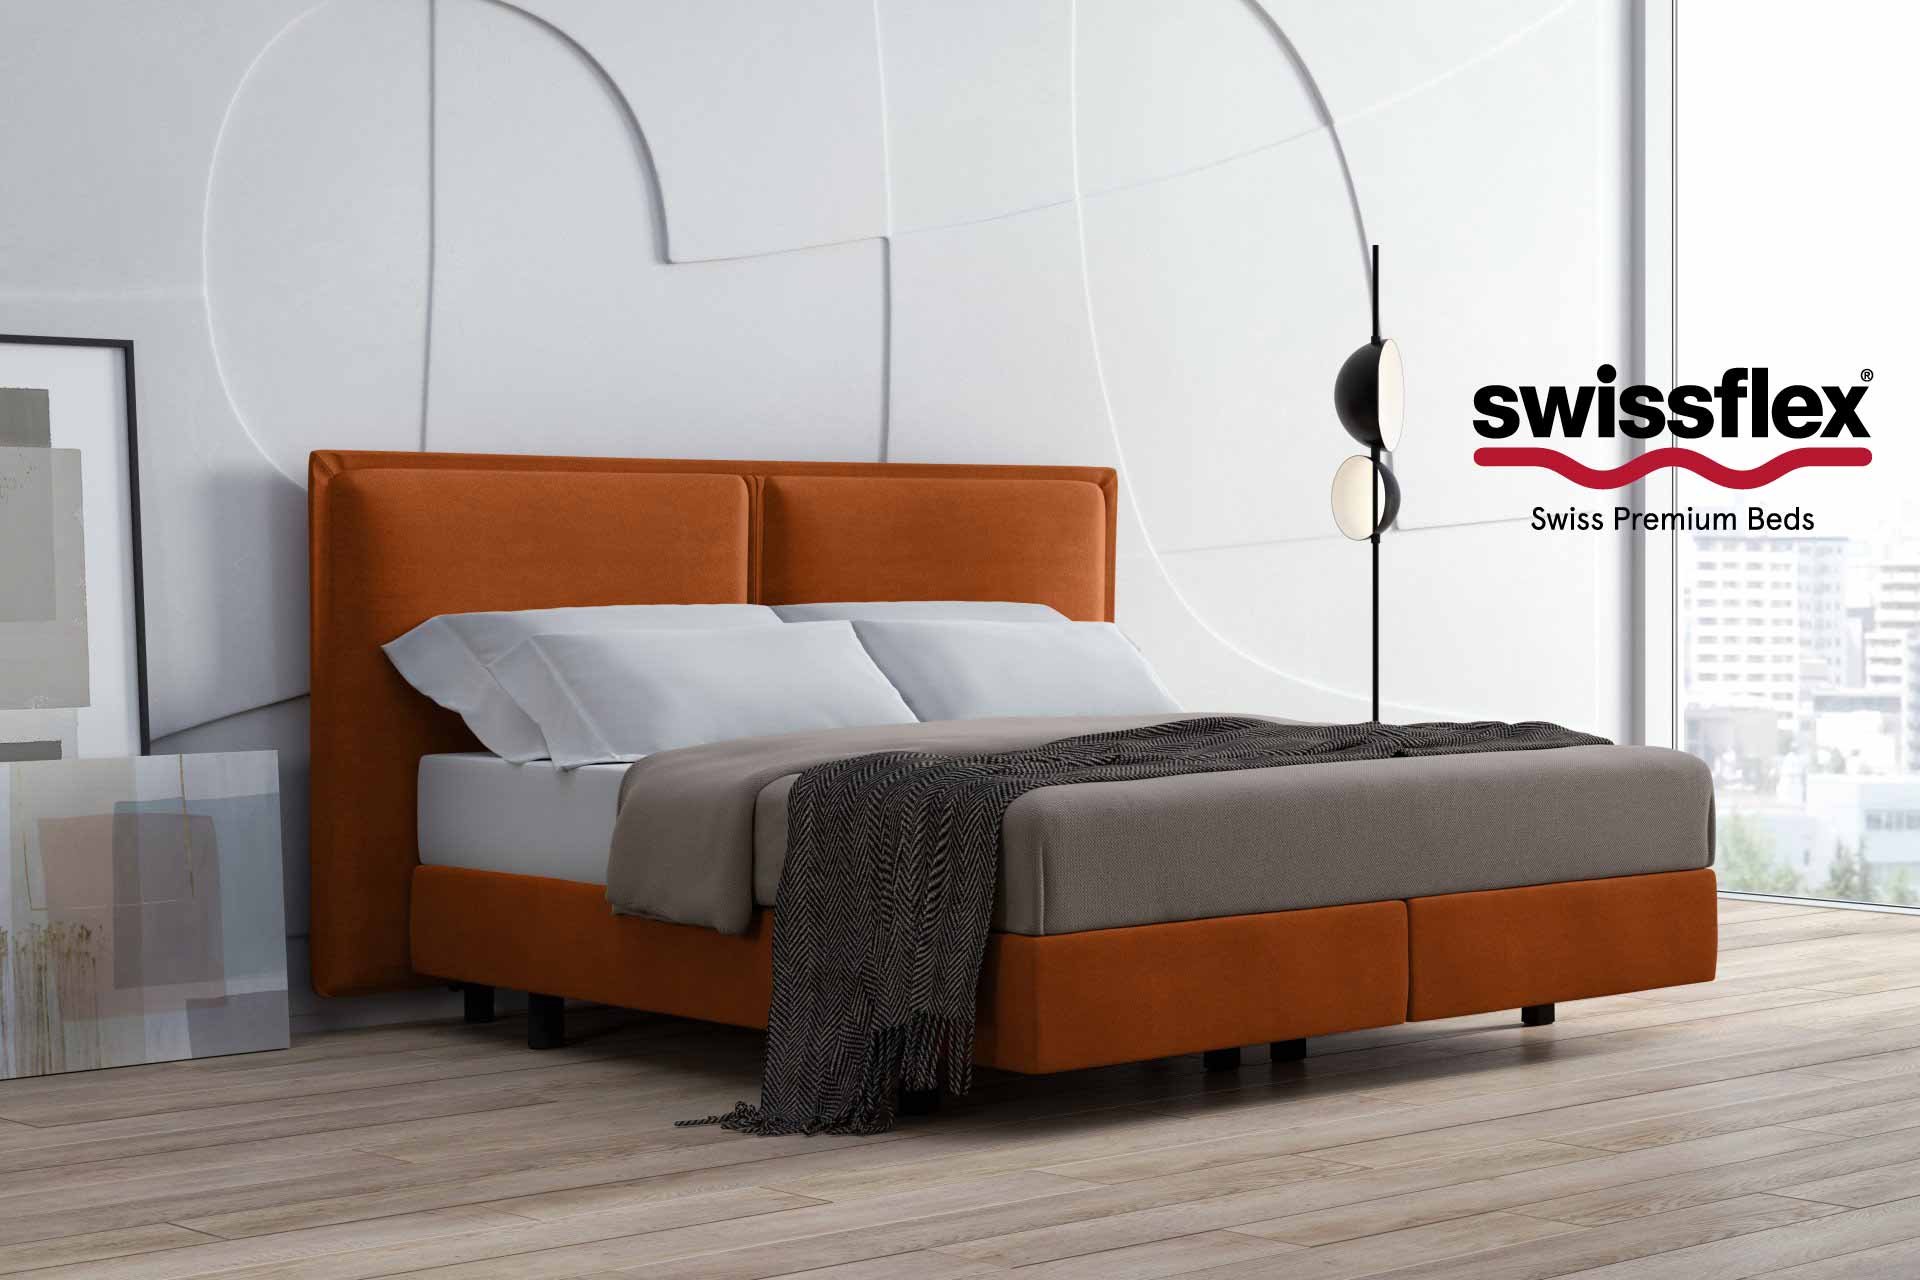 Confort-Lit & Swissflex